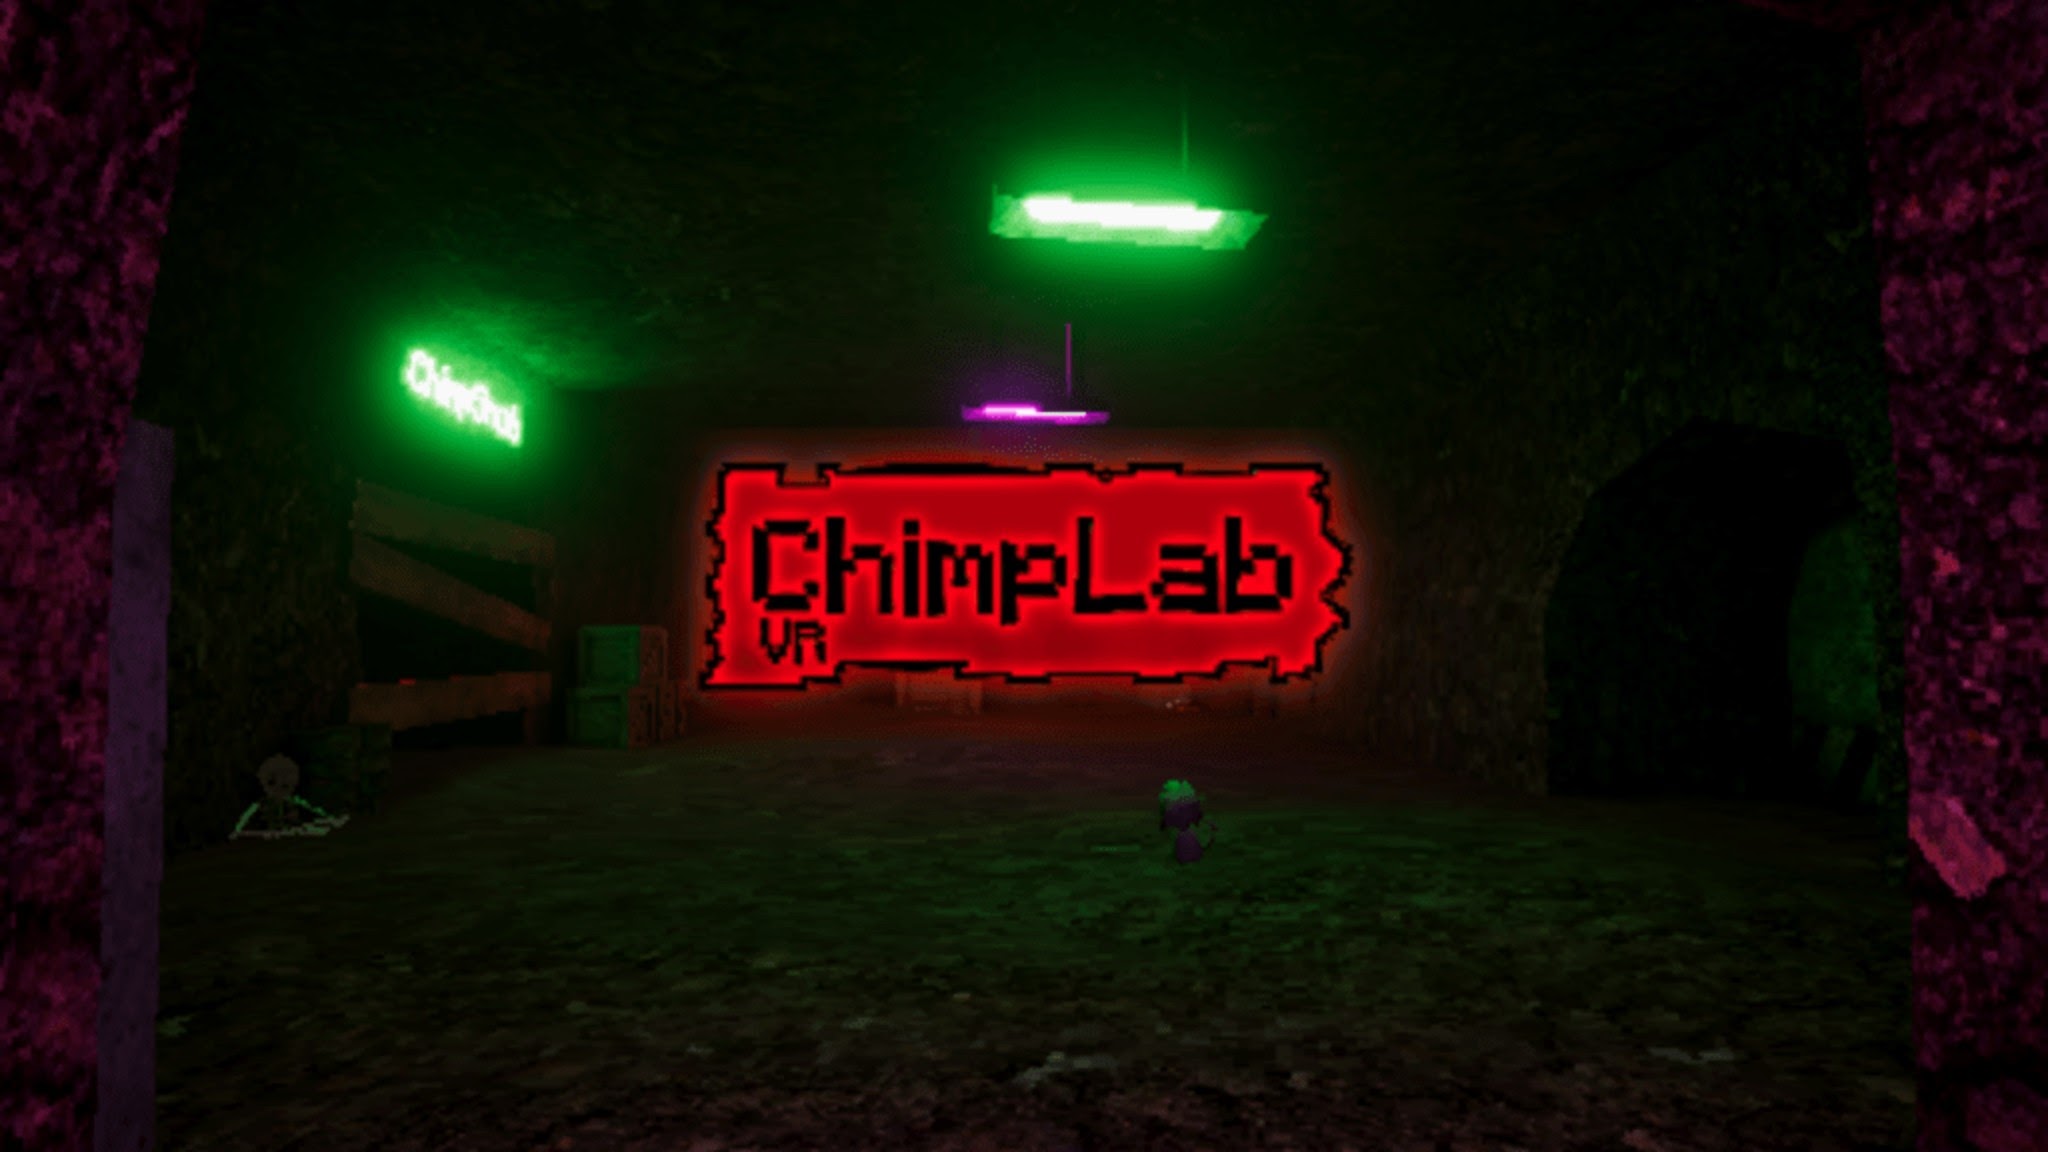 Chimplab VR